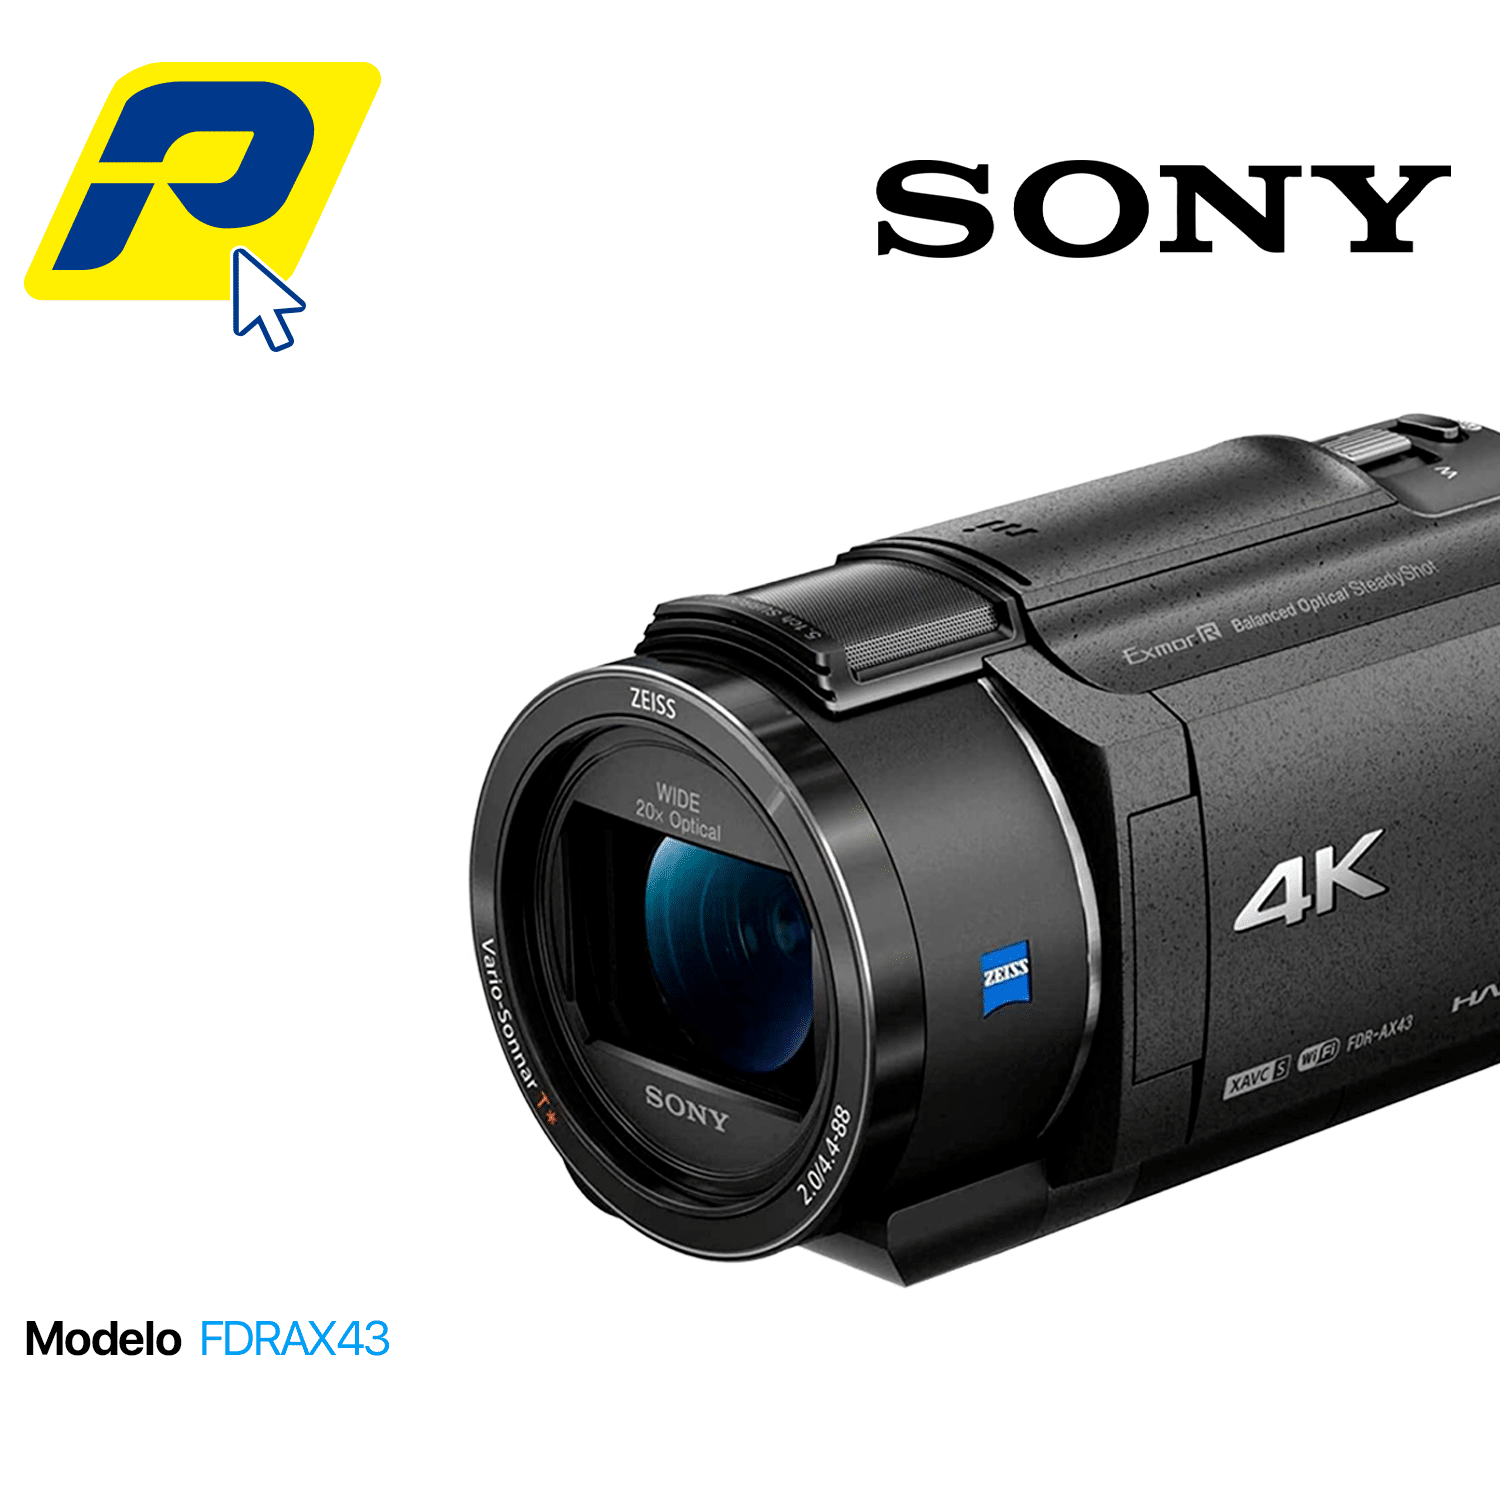 Camara profesional Sony 4k Fdrax43 mc